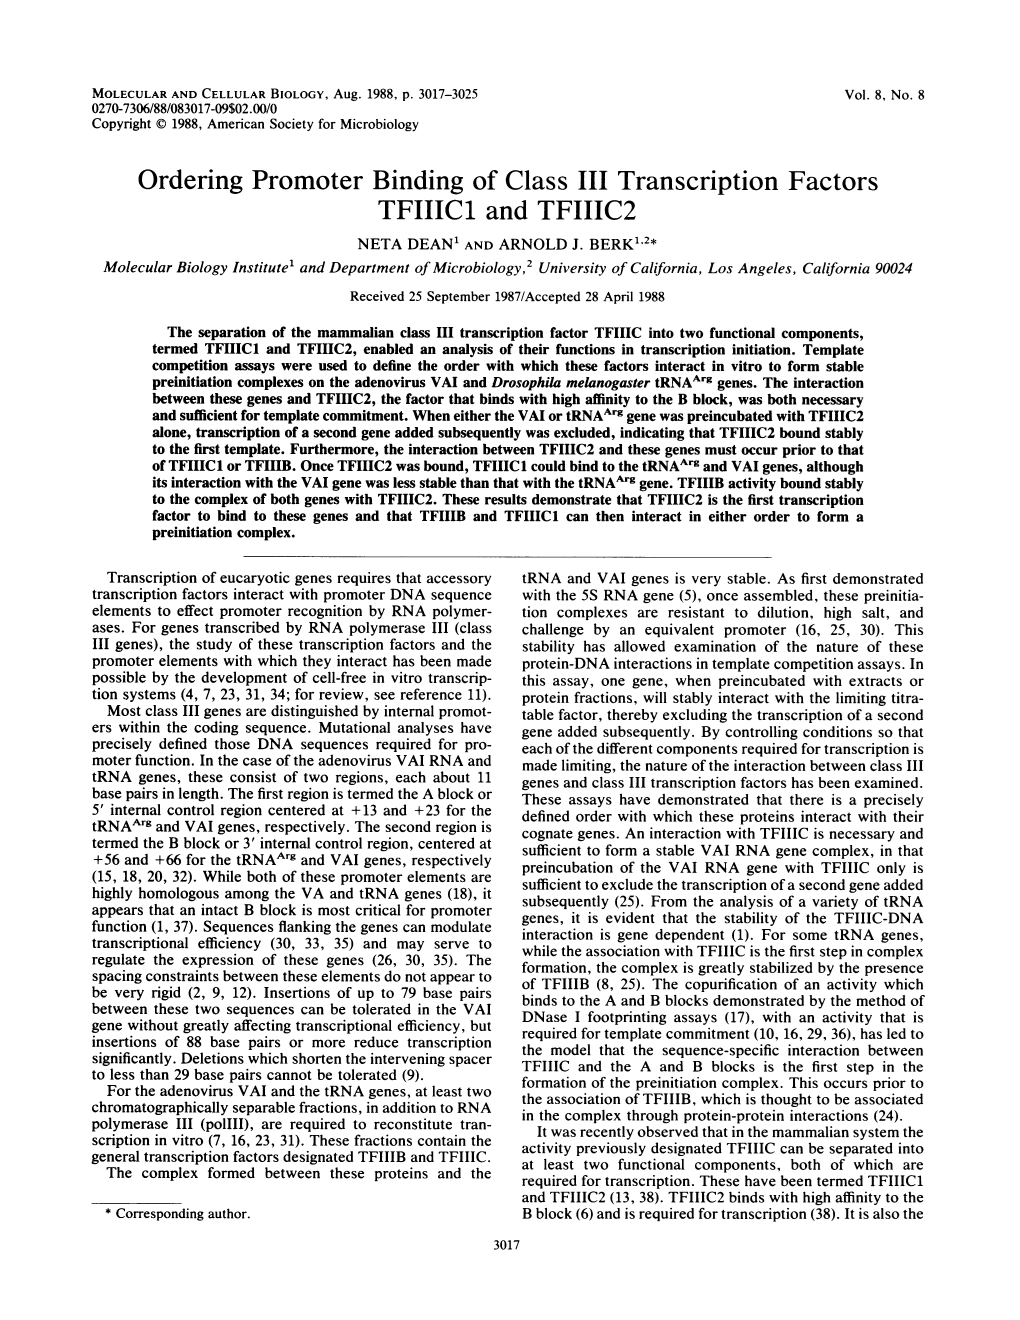 Ordering Promoter Binding of Class III Transcription Factors TFIIIC1 and TFIIIC2 NETA DEAN' and ARNOLD J